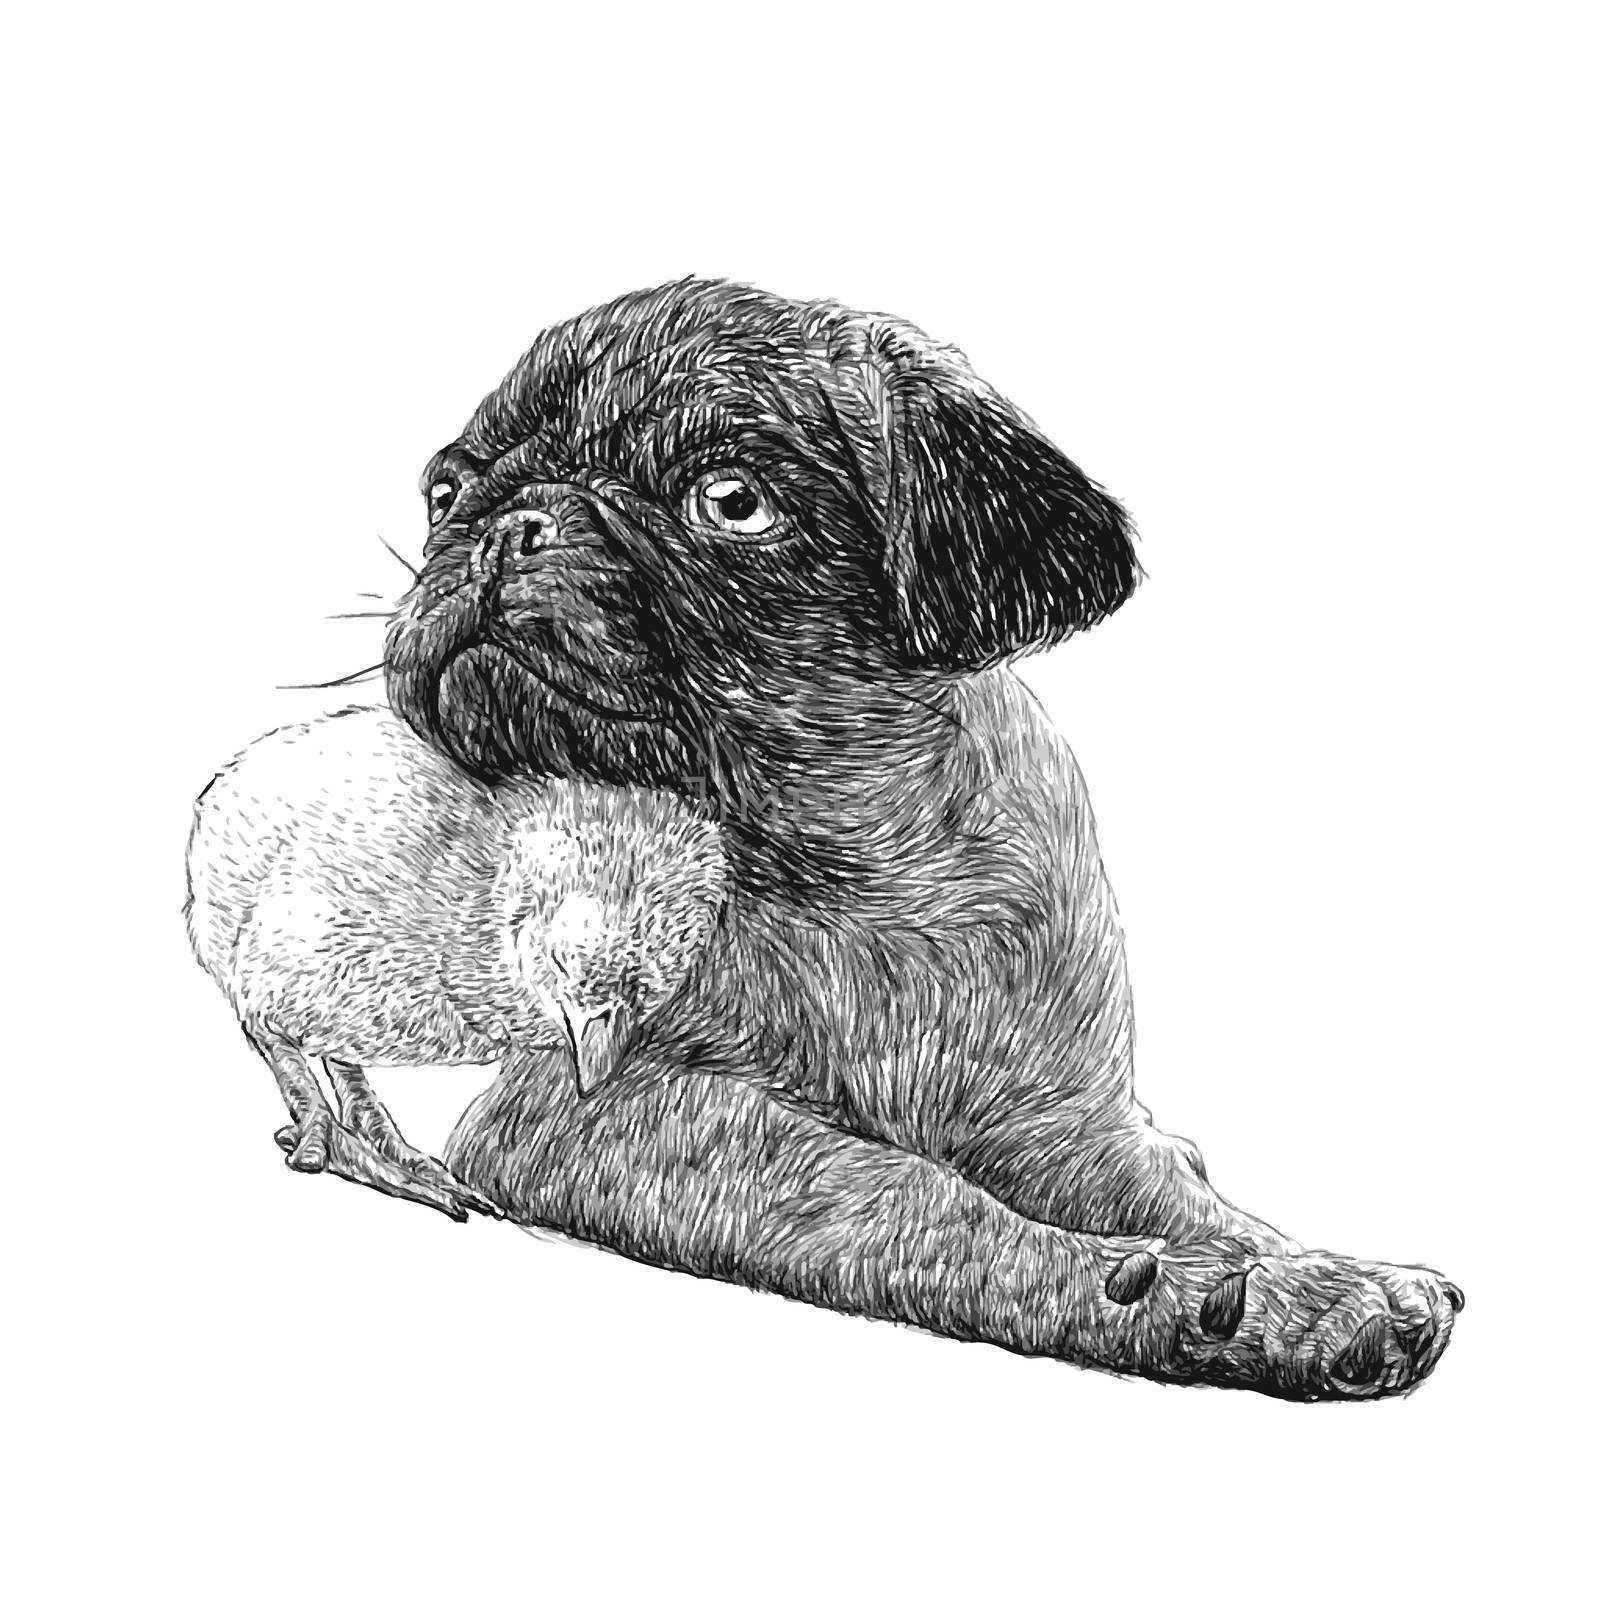 Image of Pug dog ang a chick hand drawn vector